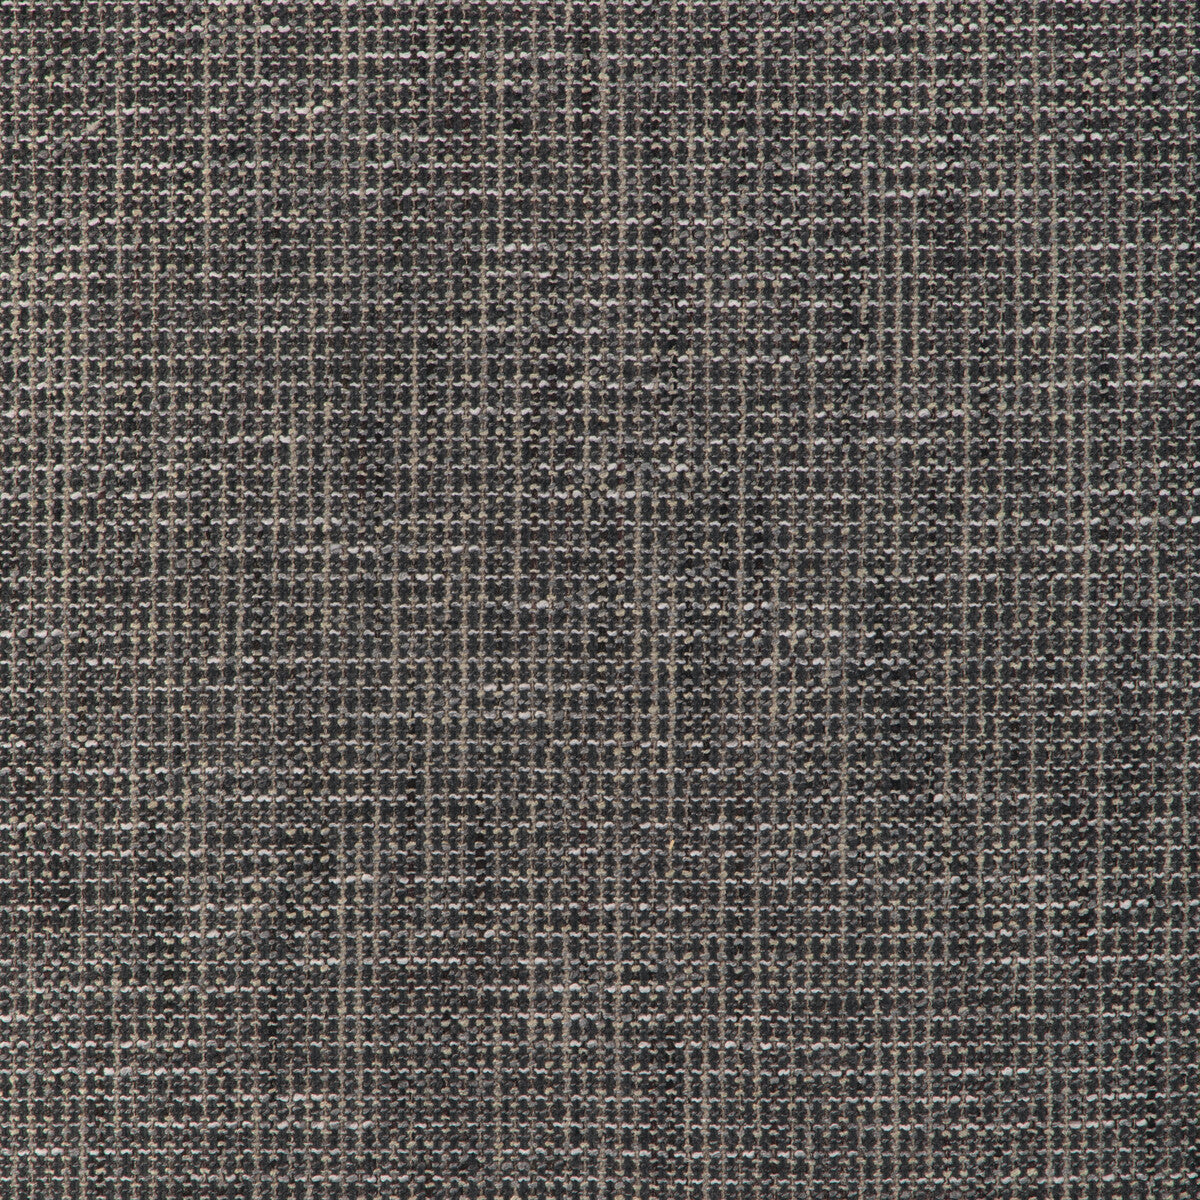 Kravet Smart fabric in 36669-1121 color - pattern 36669.1121.0 - by Kravet Smart in the Performance Kravetarmor collection